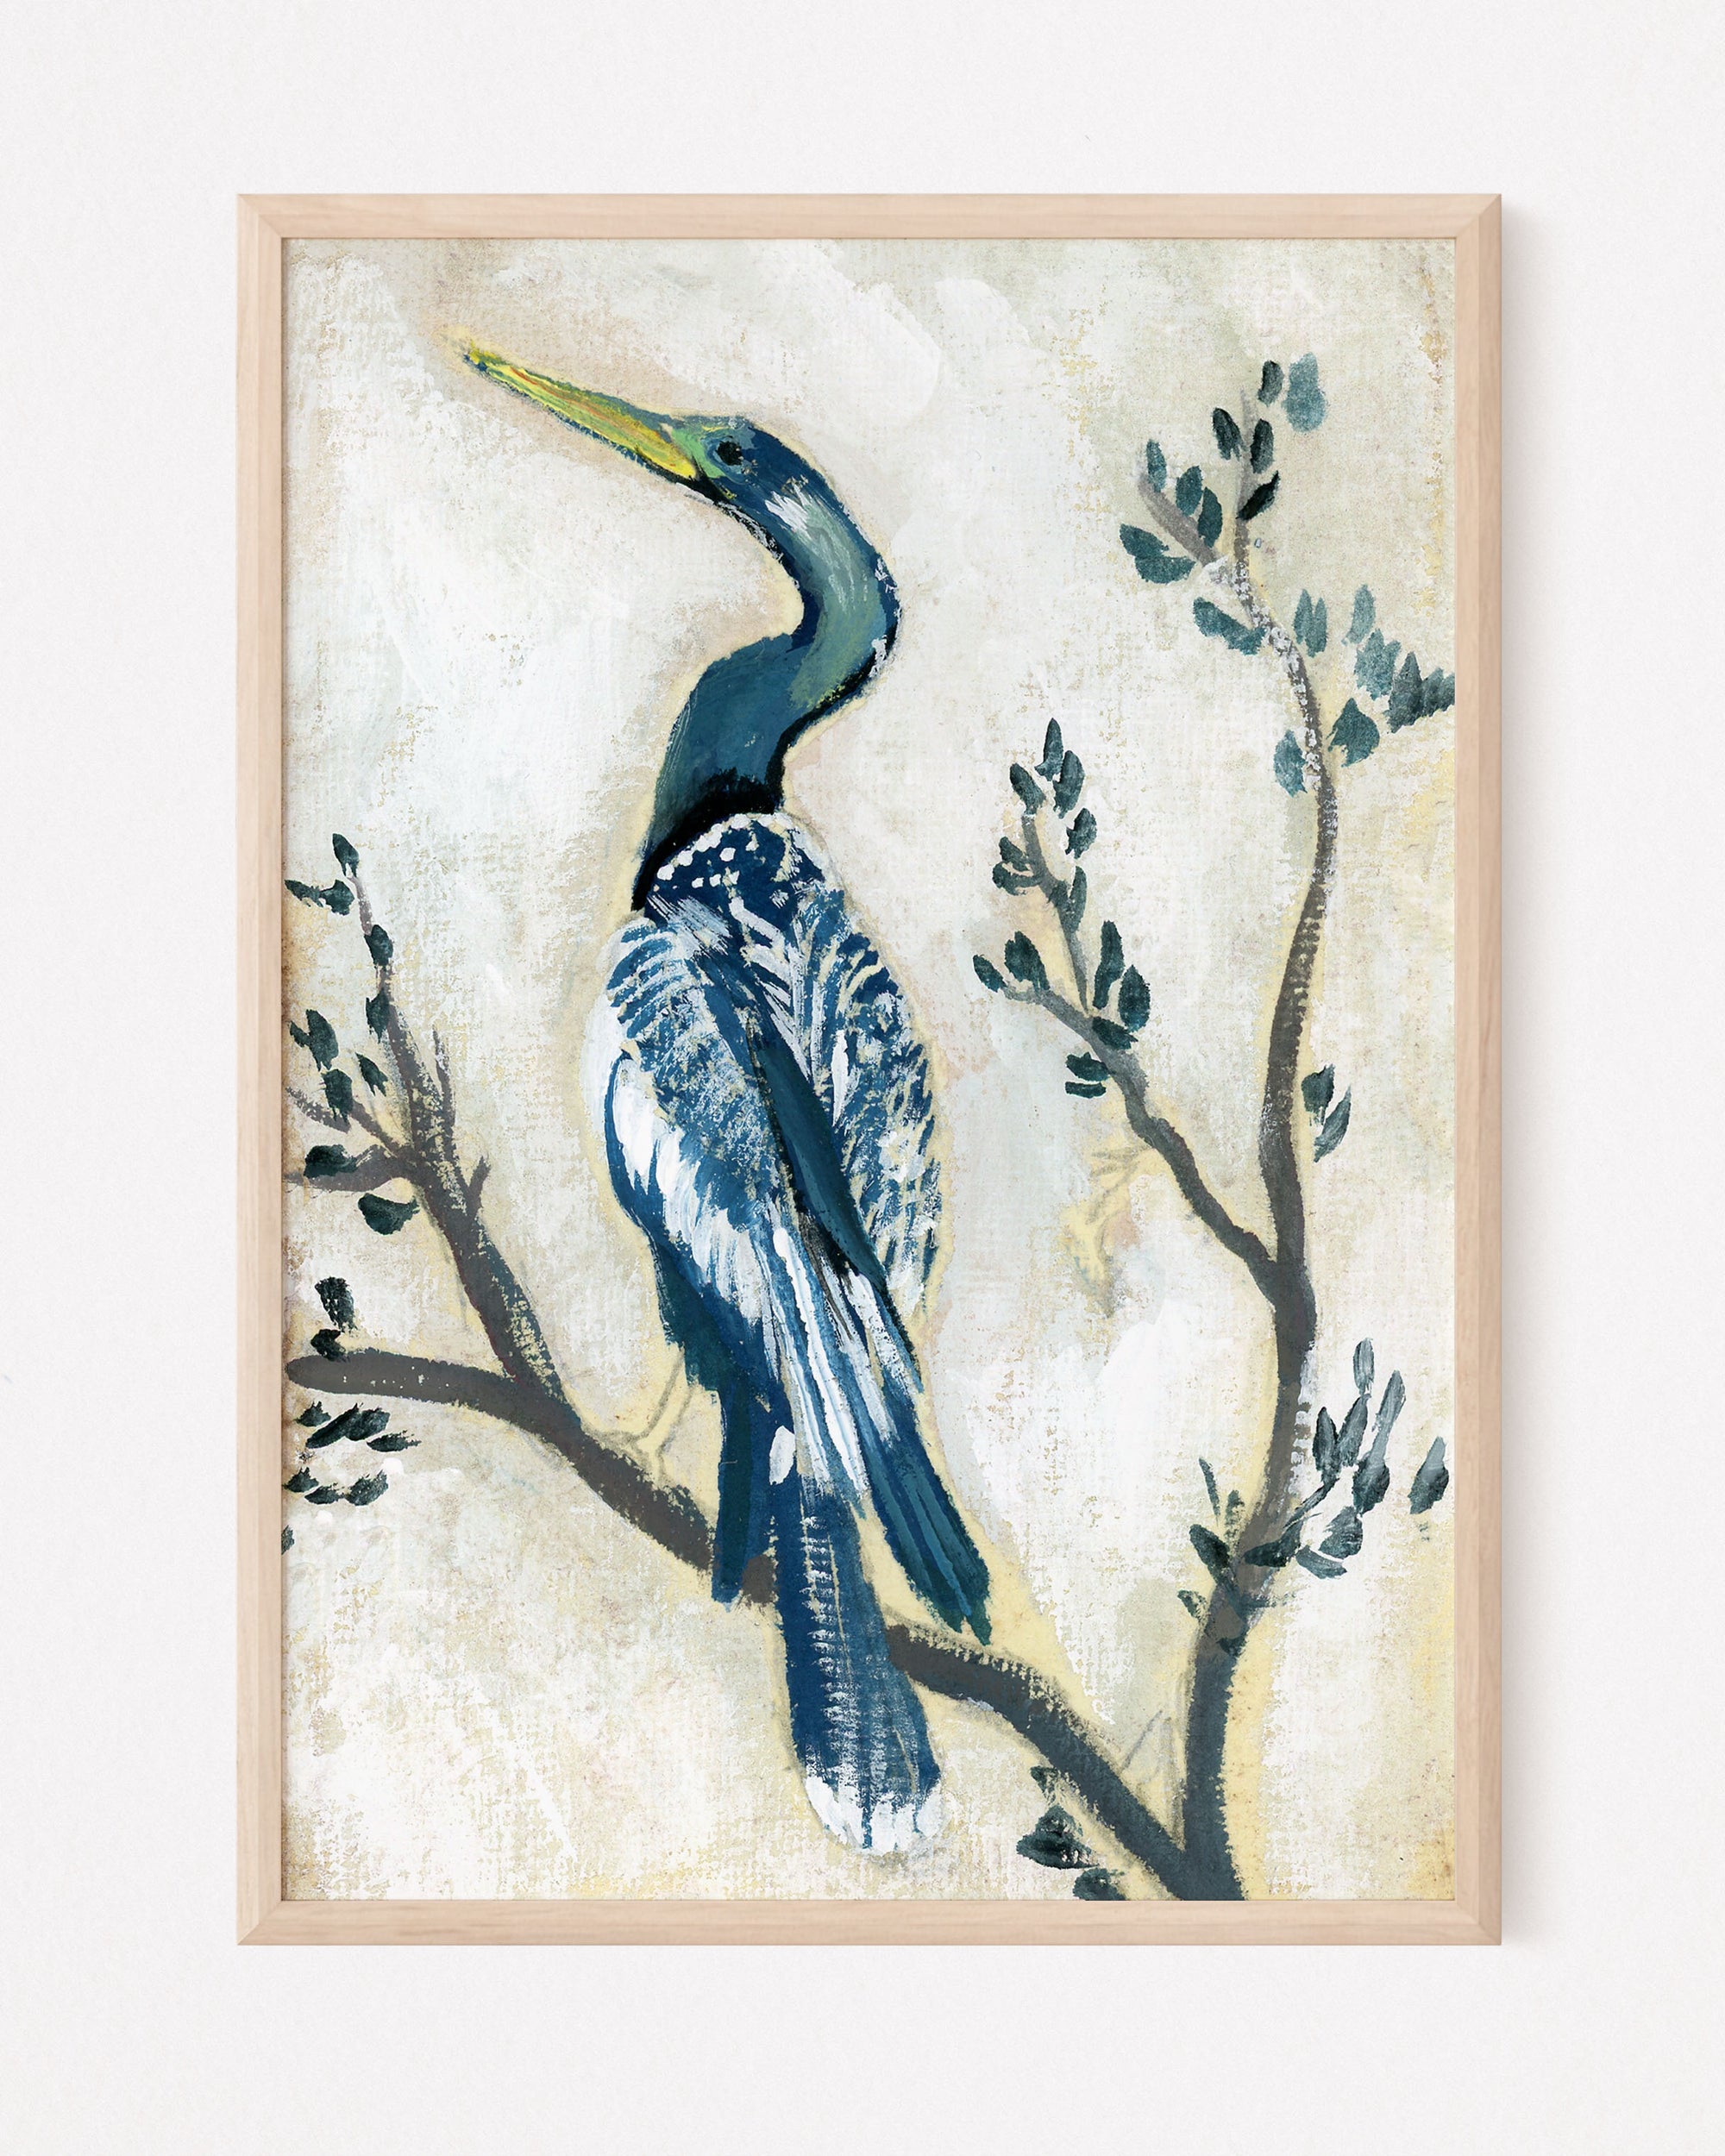 Rebecca, a Anhinga Bird Vertical Print